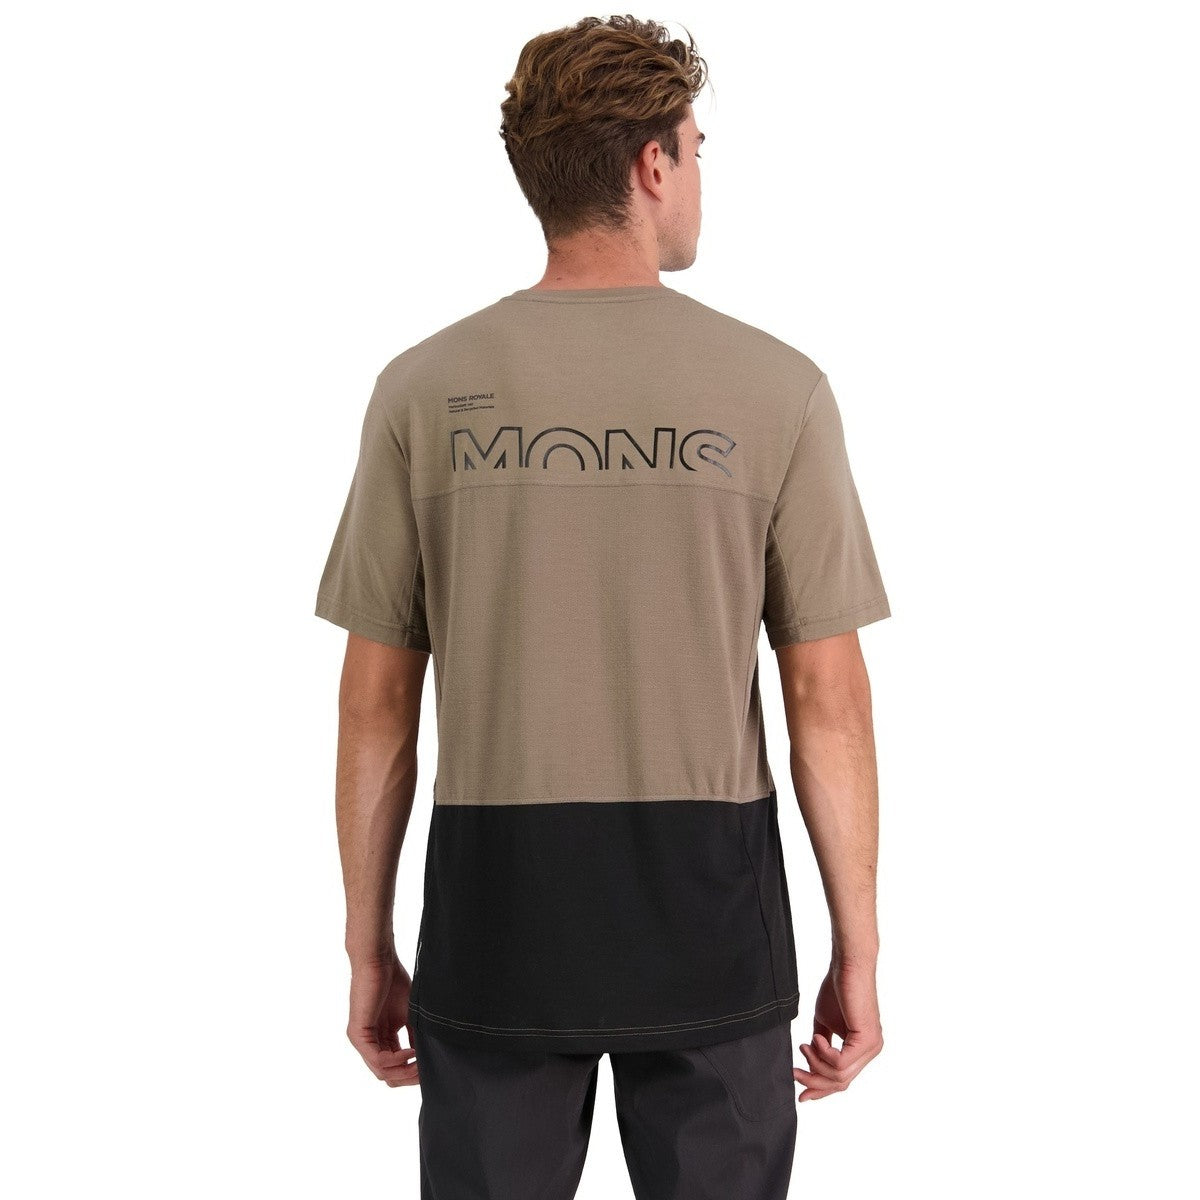 Mons Royale Men's Tarn Merino Shift T-Shirt - Walnut / Black